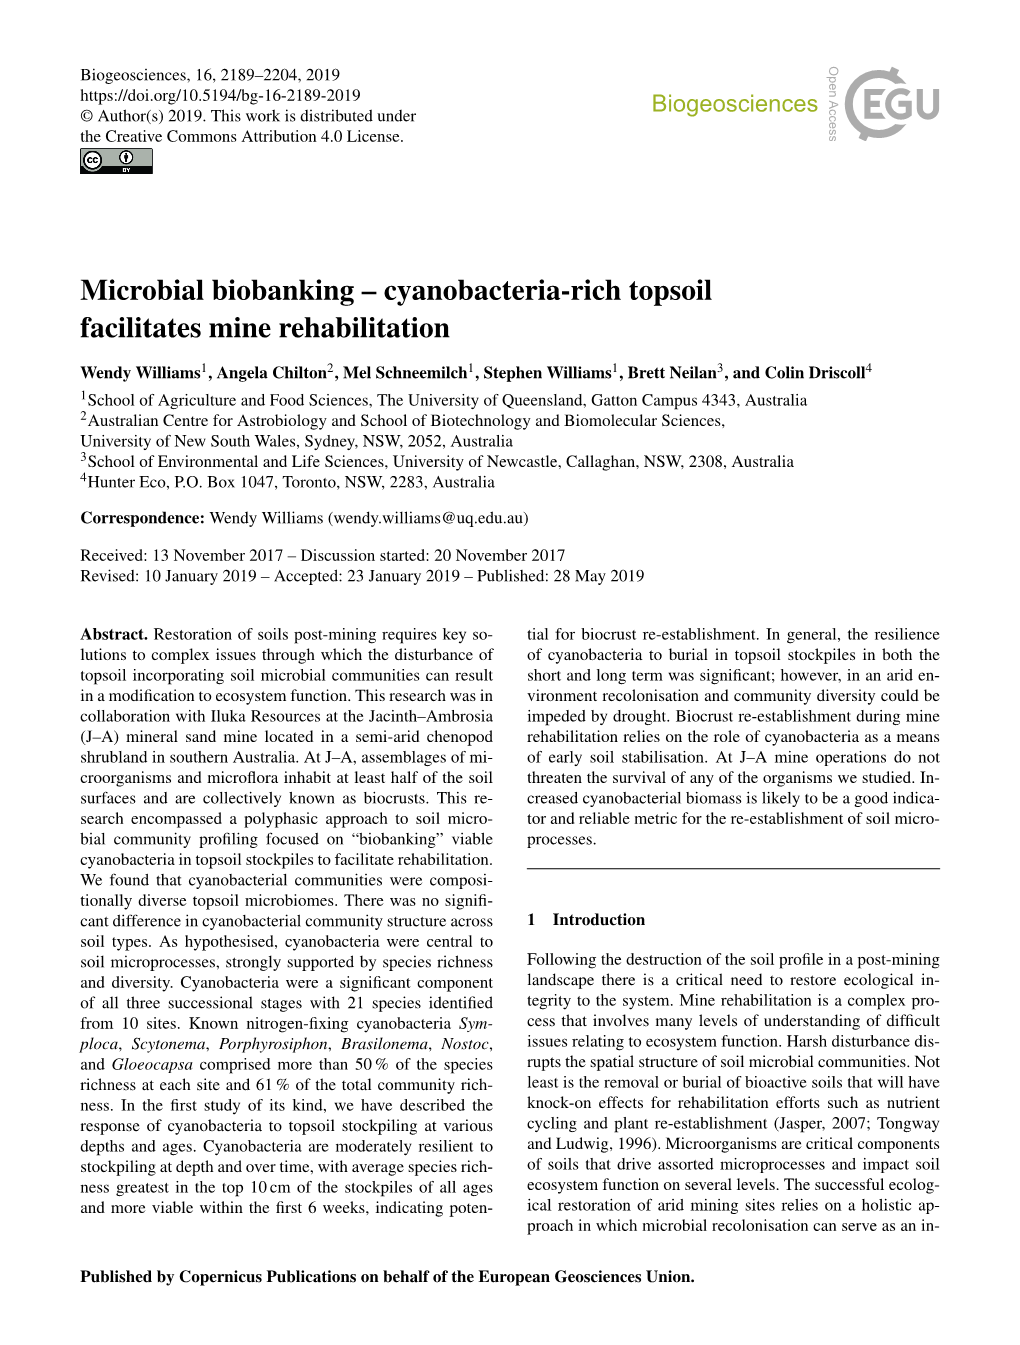 Microbial Biobanking – Cyanobacteria-Rich Topsoil Facilitates Mine Rehabilitation